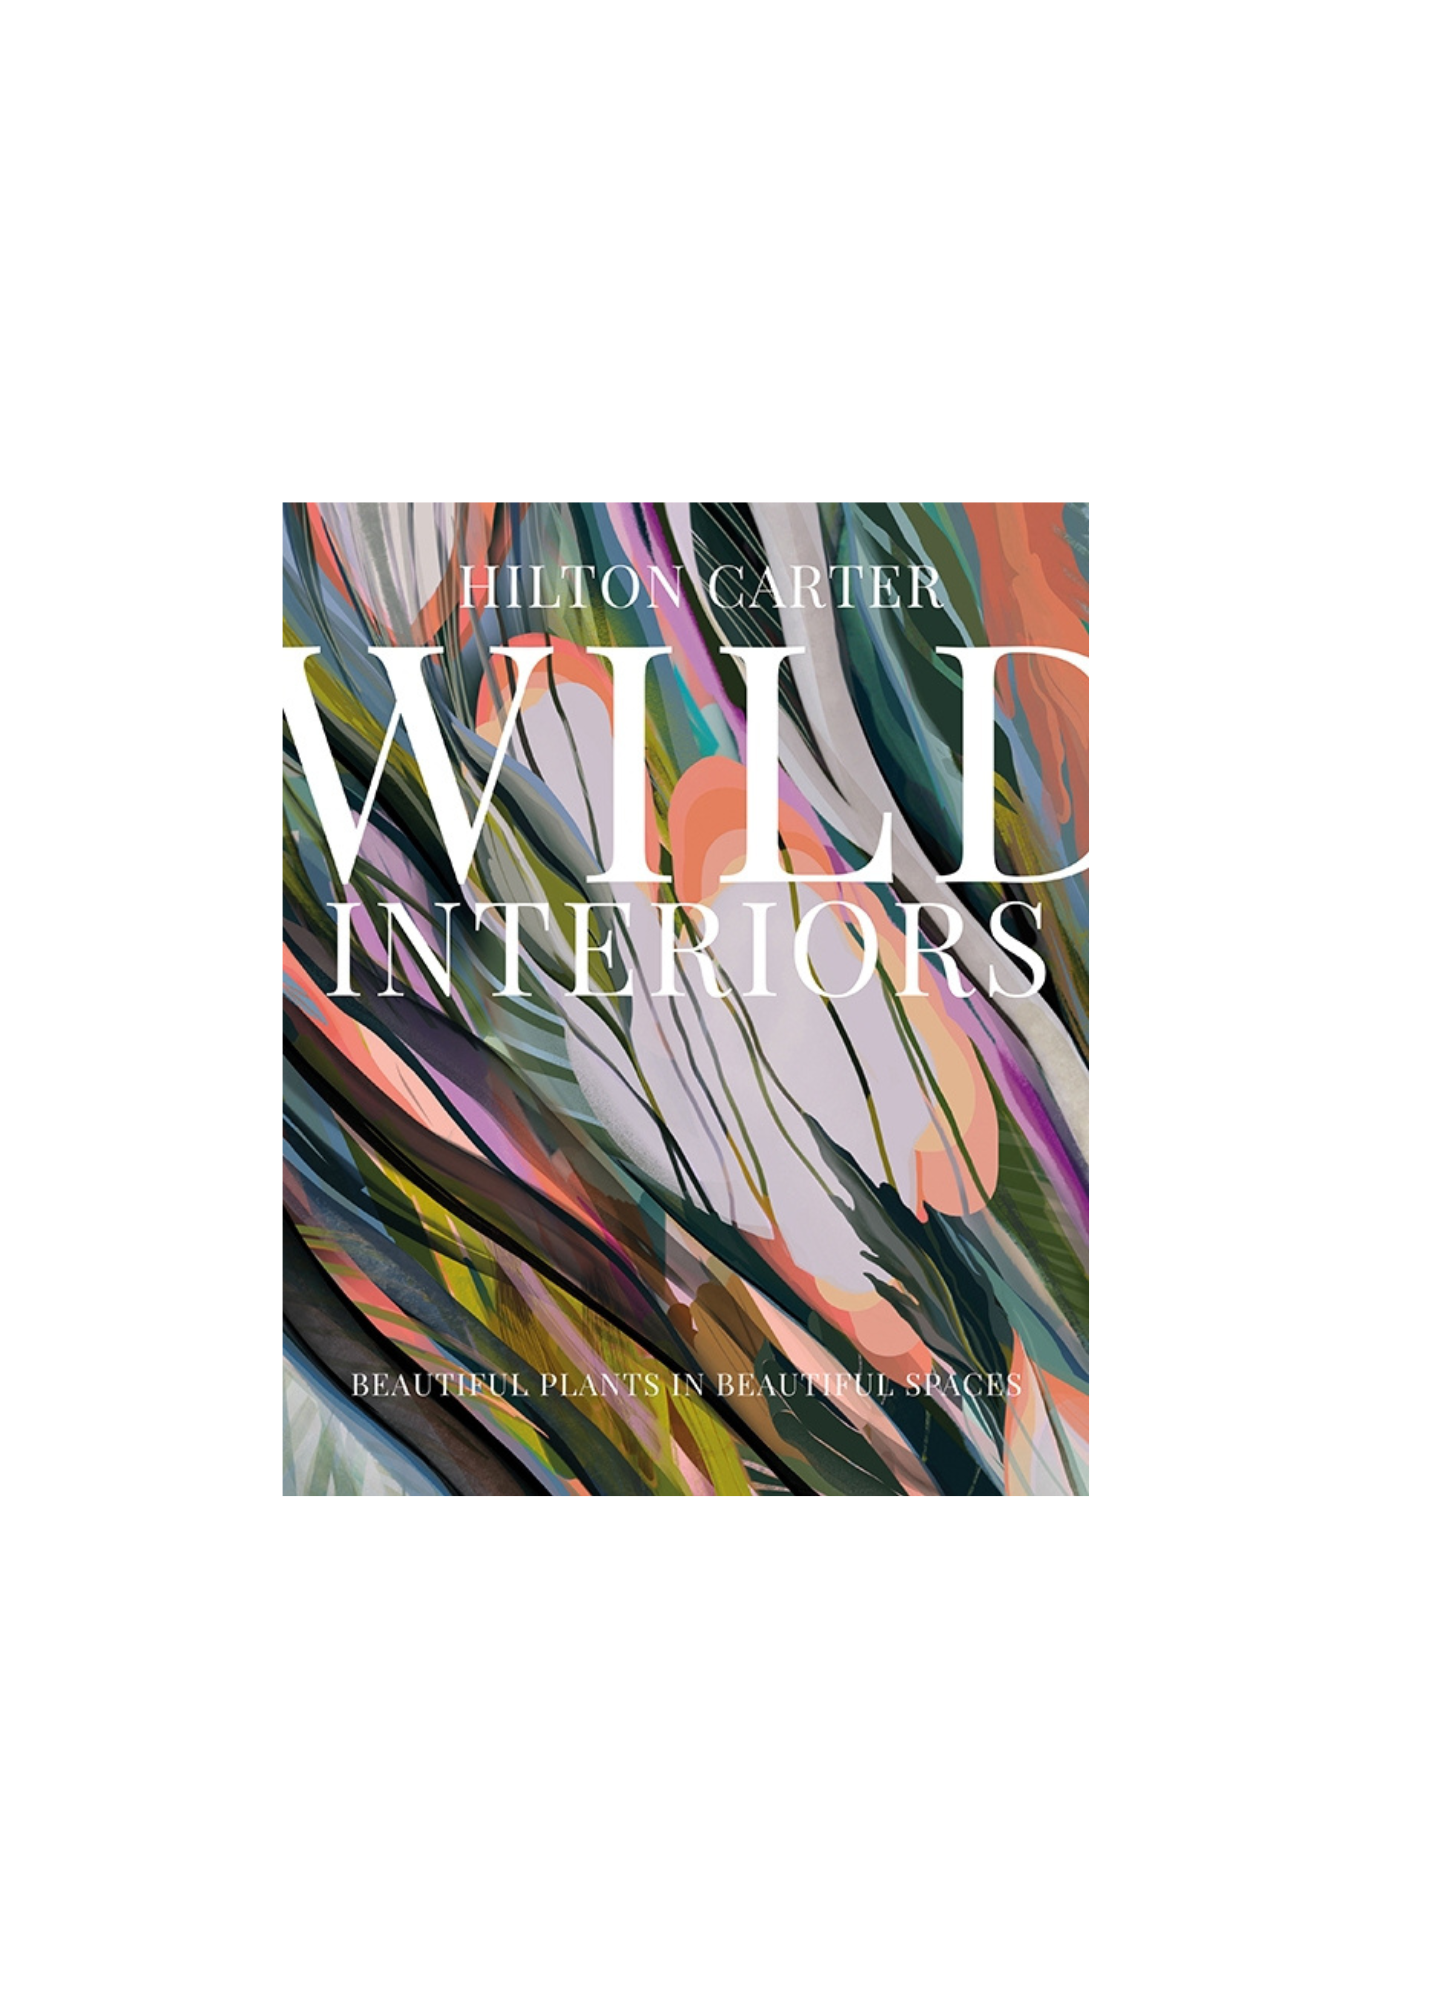 Wild Interiors by Hilton Carter Book